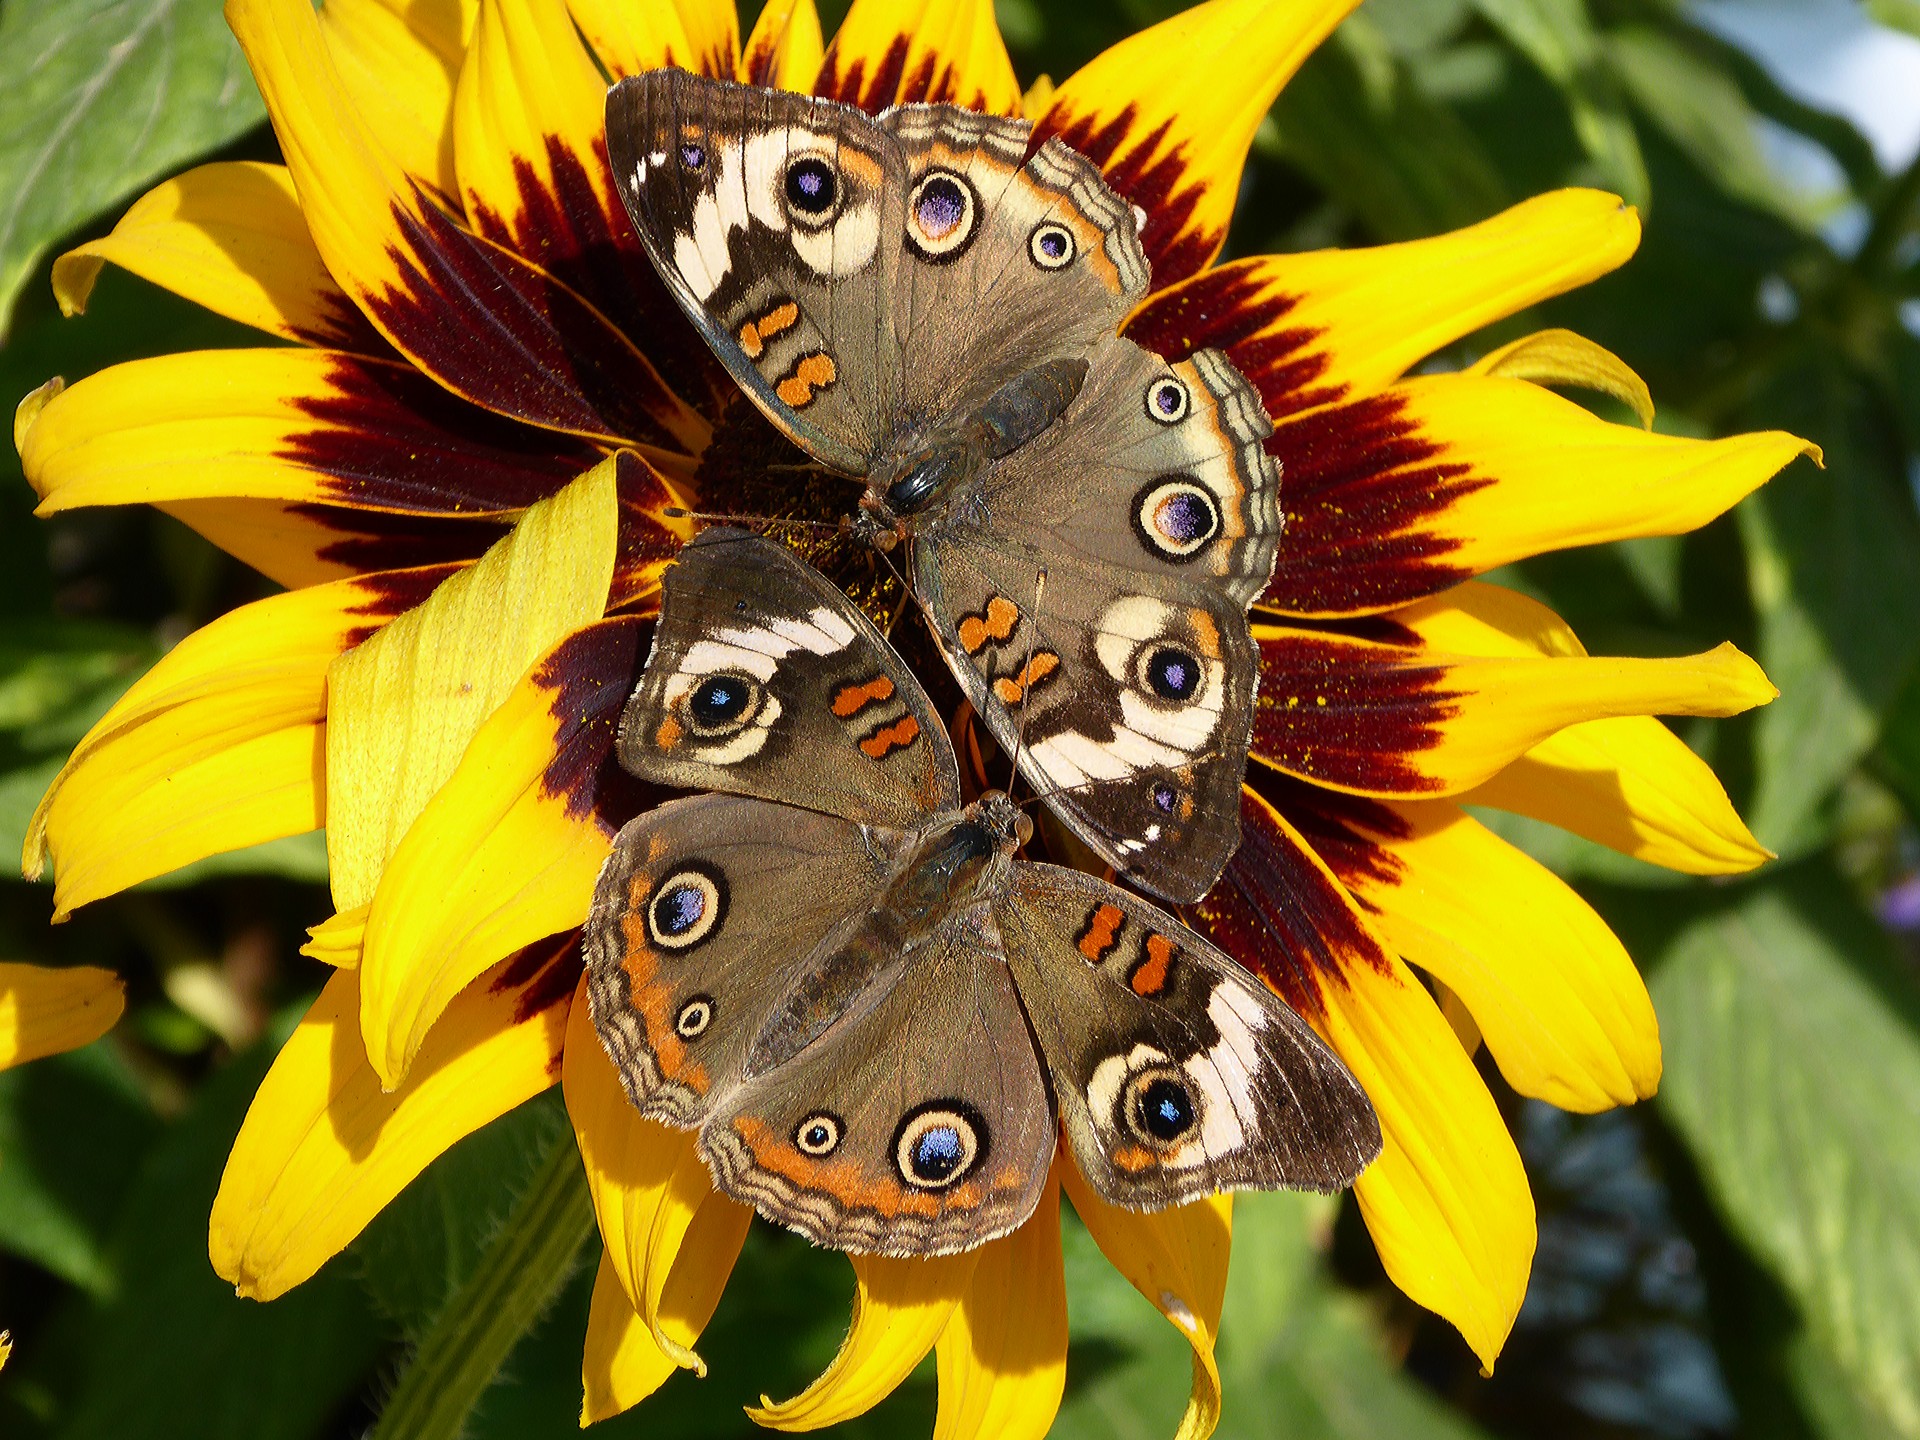 Two Butterflies On Sunflower